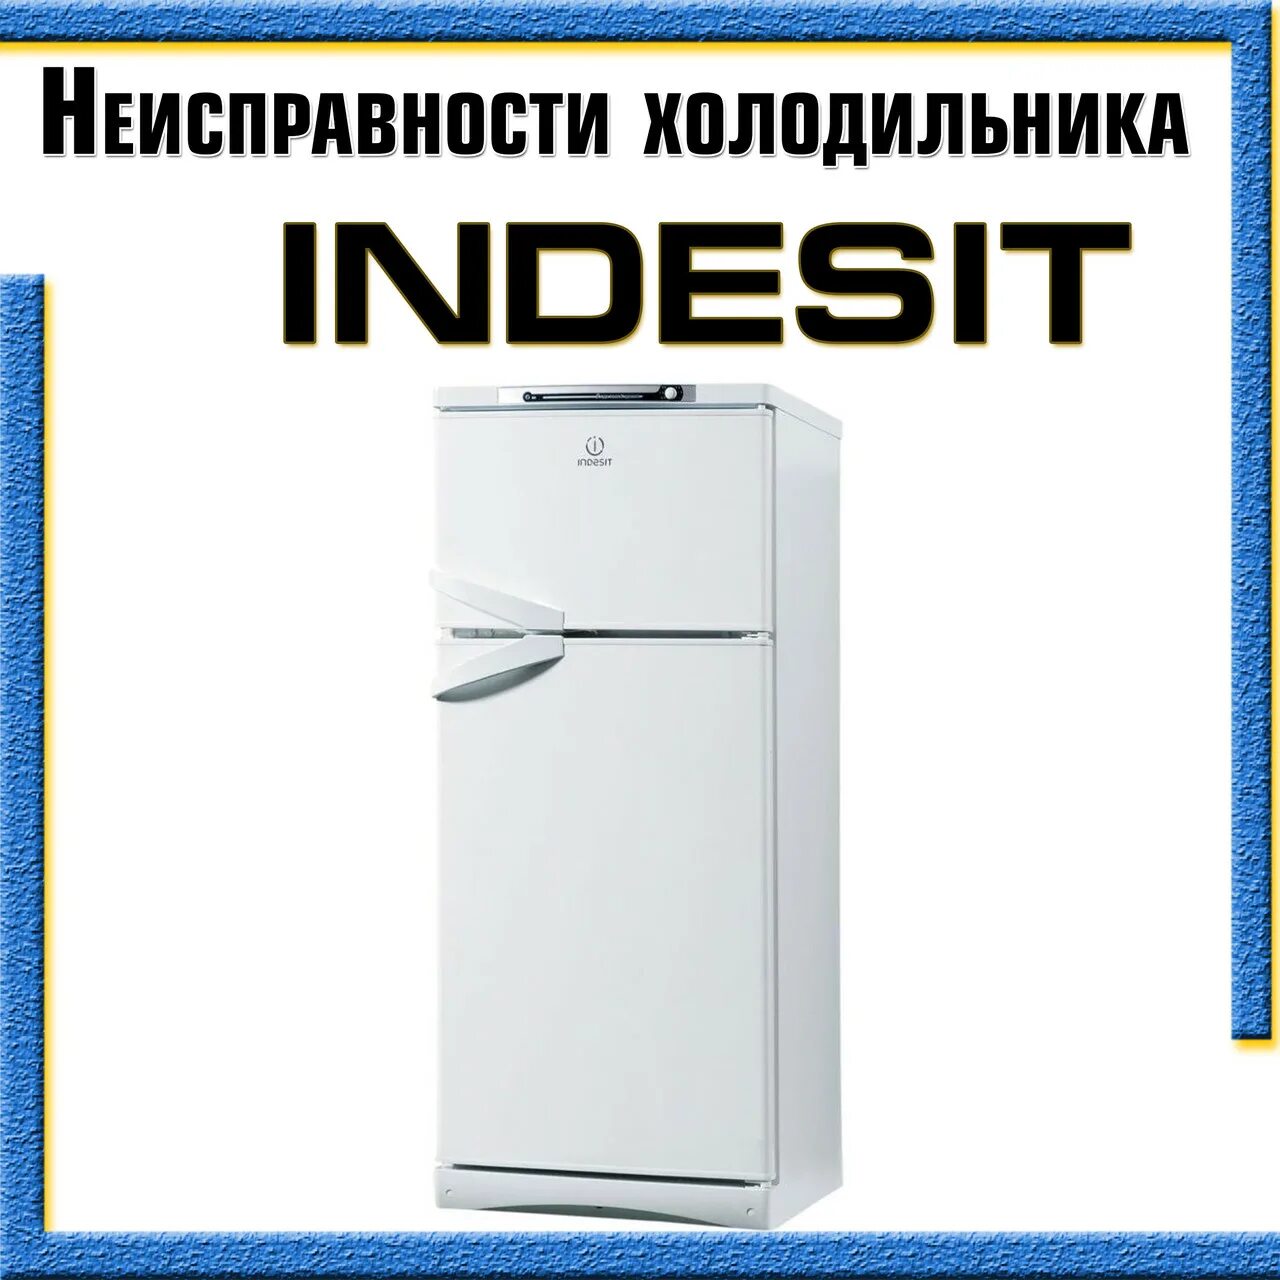 Холодильник индезит причины неисправности. Индезит холодильник производитель. Ремонт холодильника Индезит своими руками.